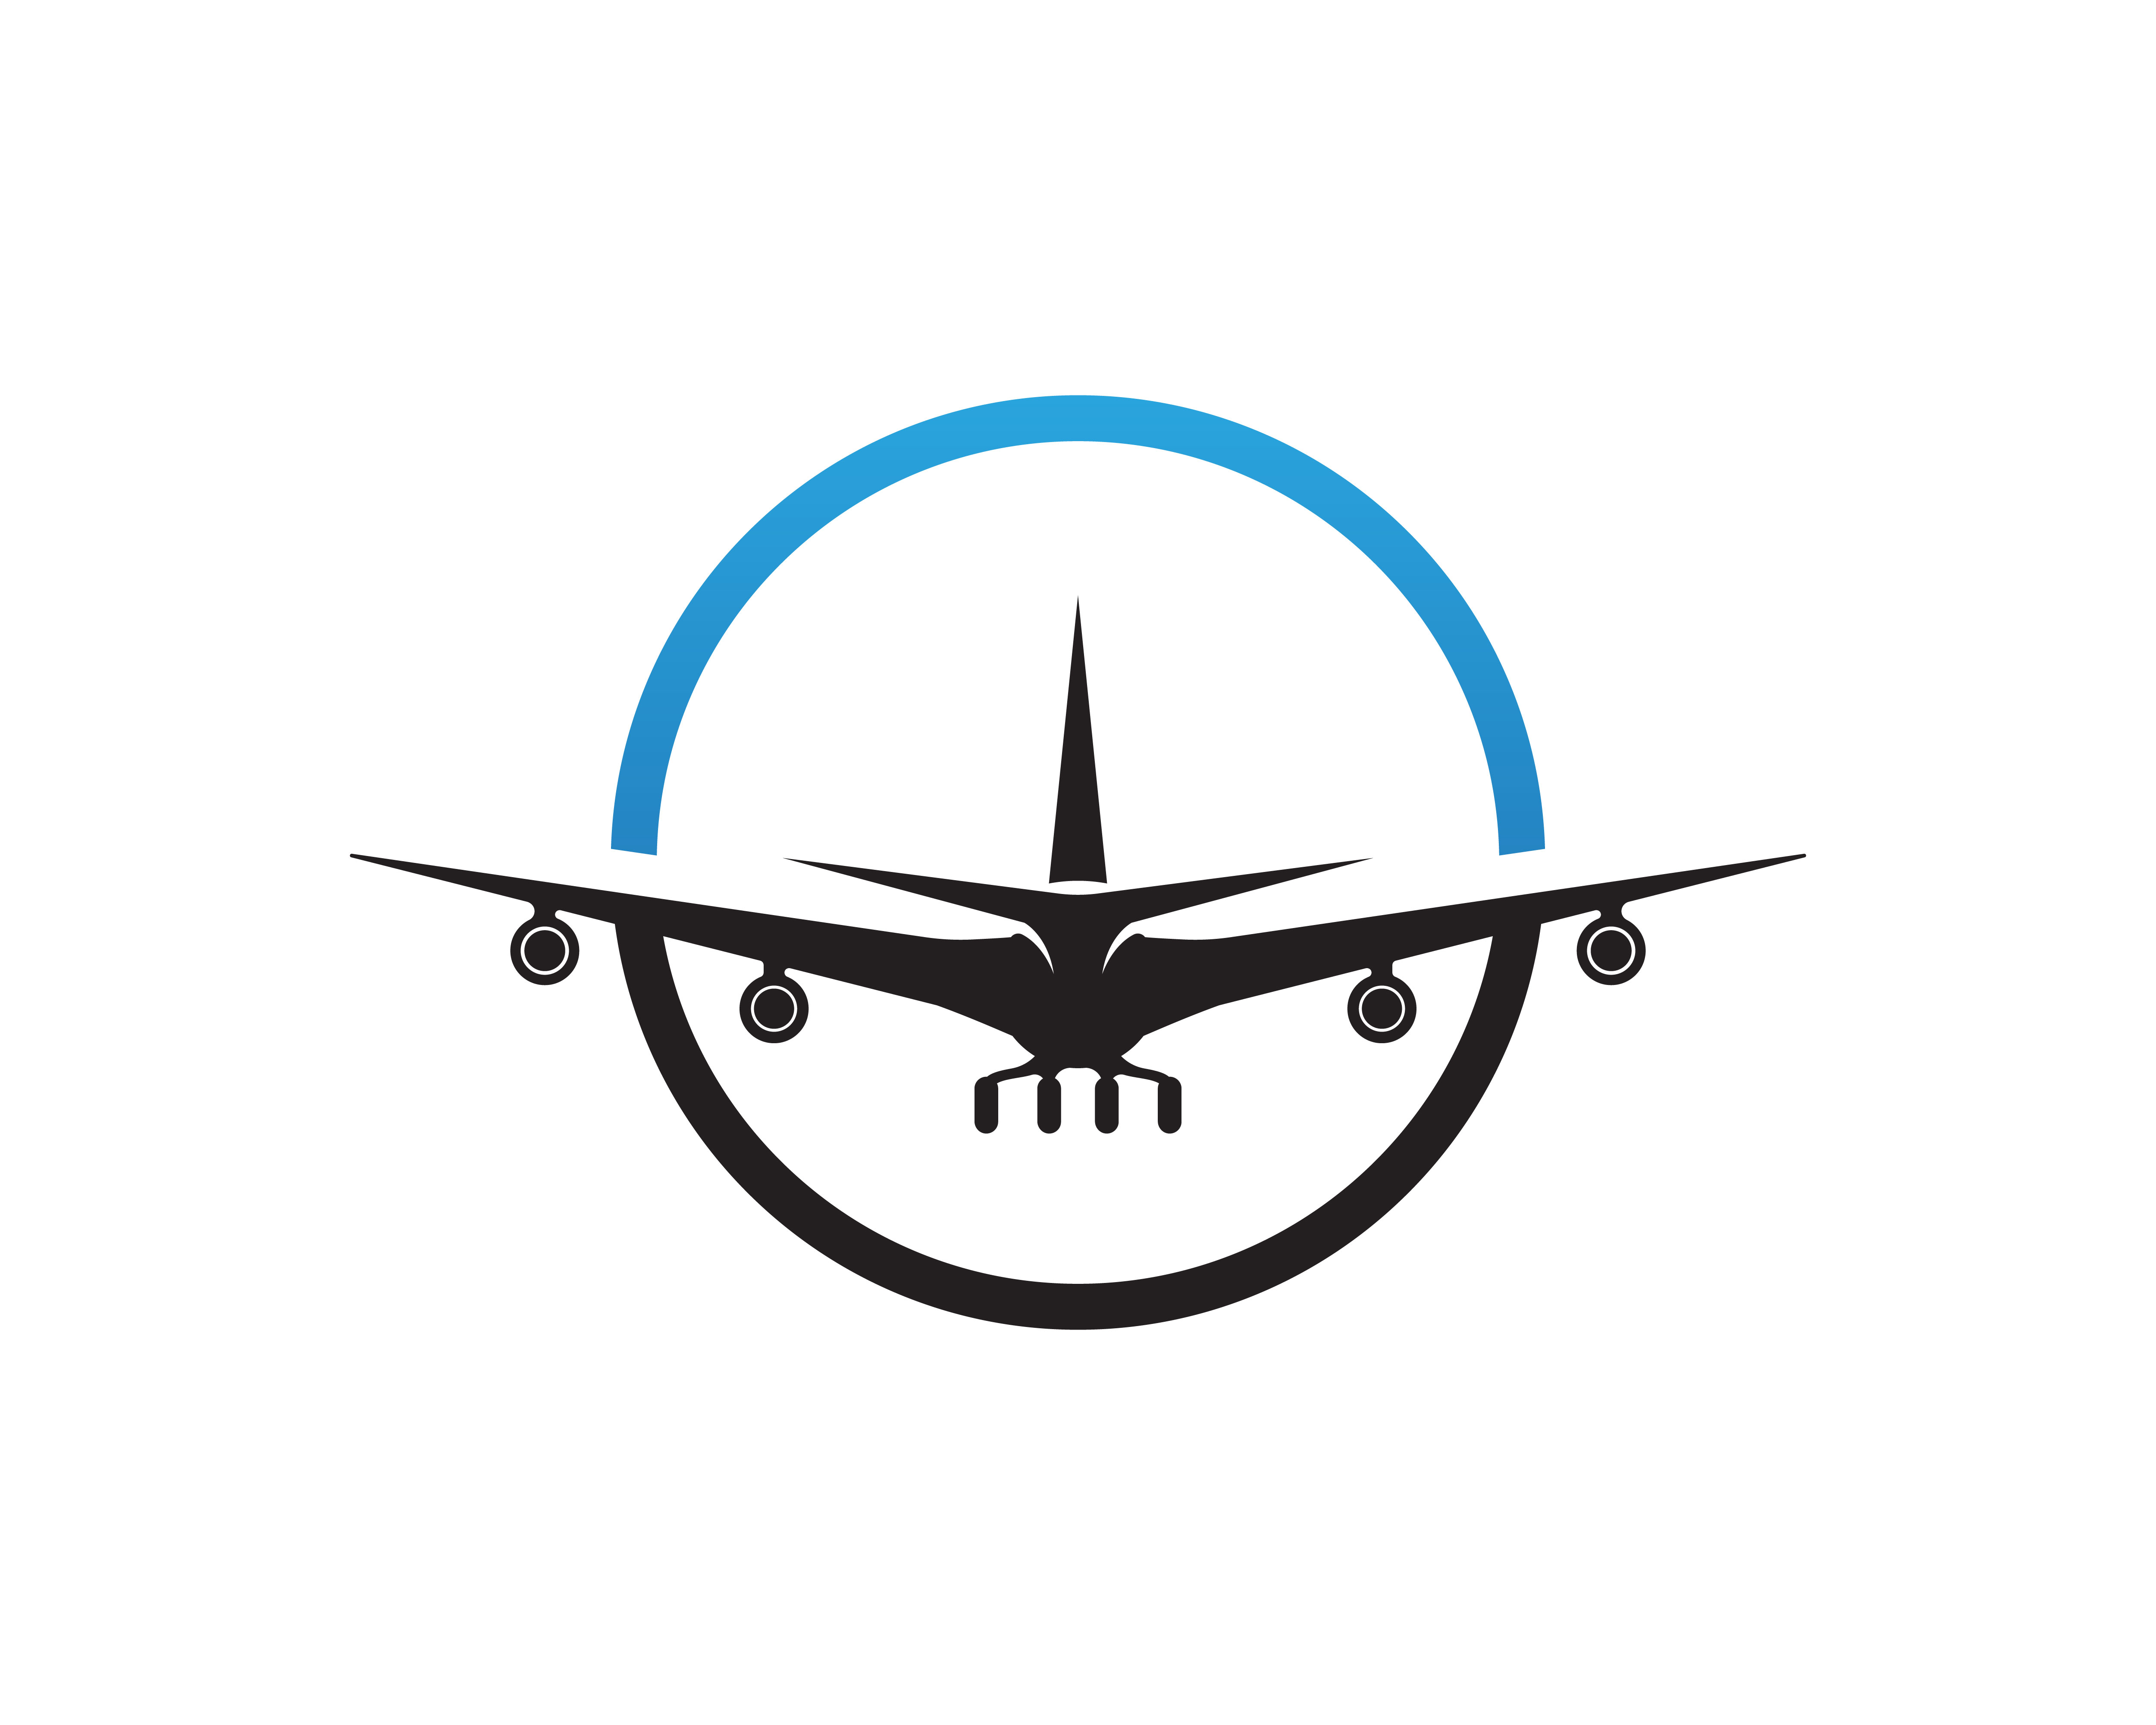 United Airline Plane Logo